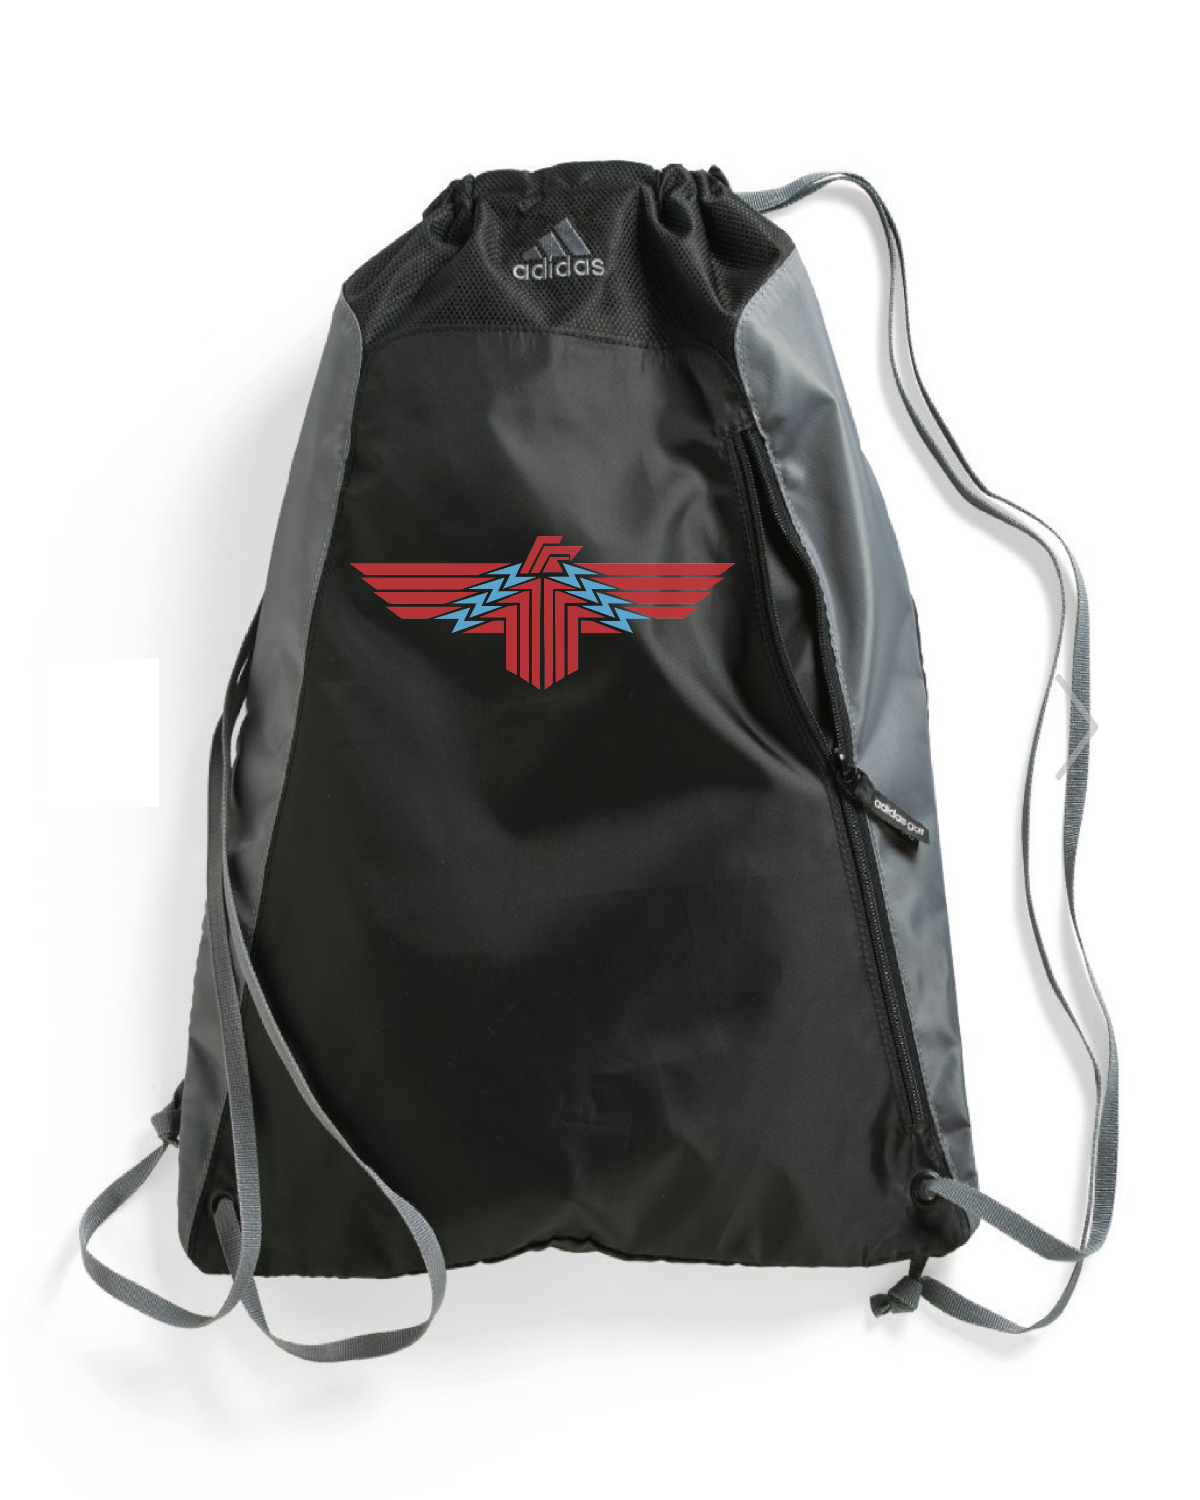 Thunderbird Adidas Gym Sack w/ zipper